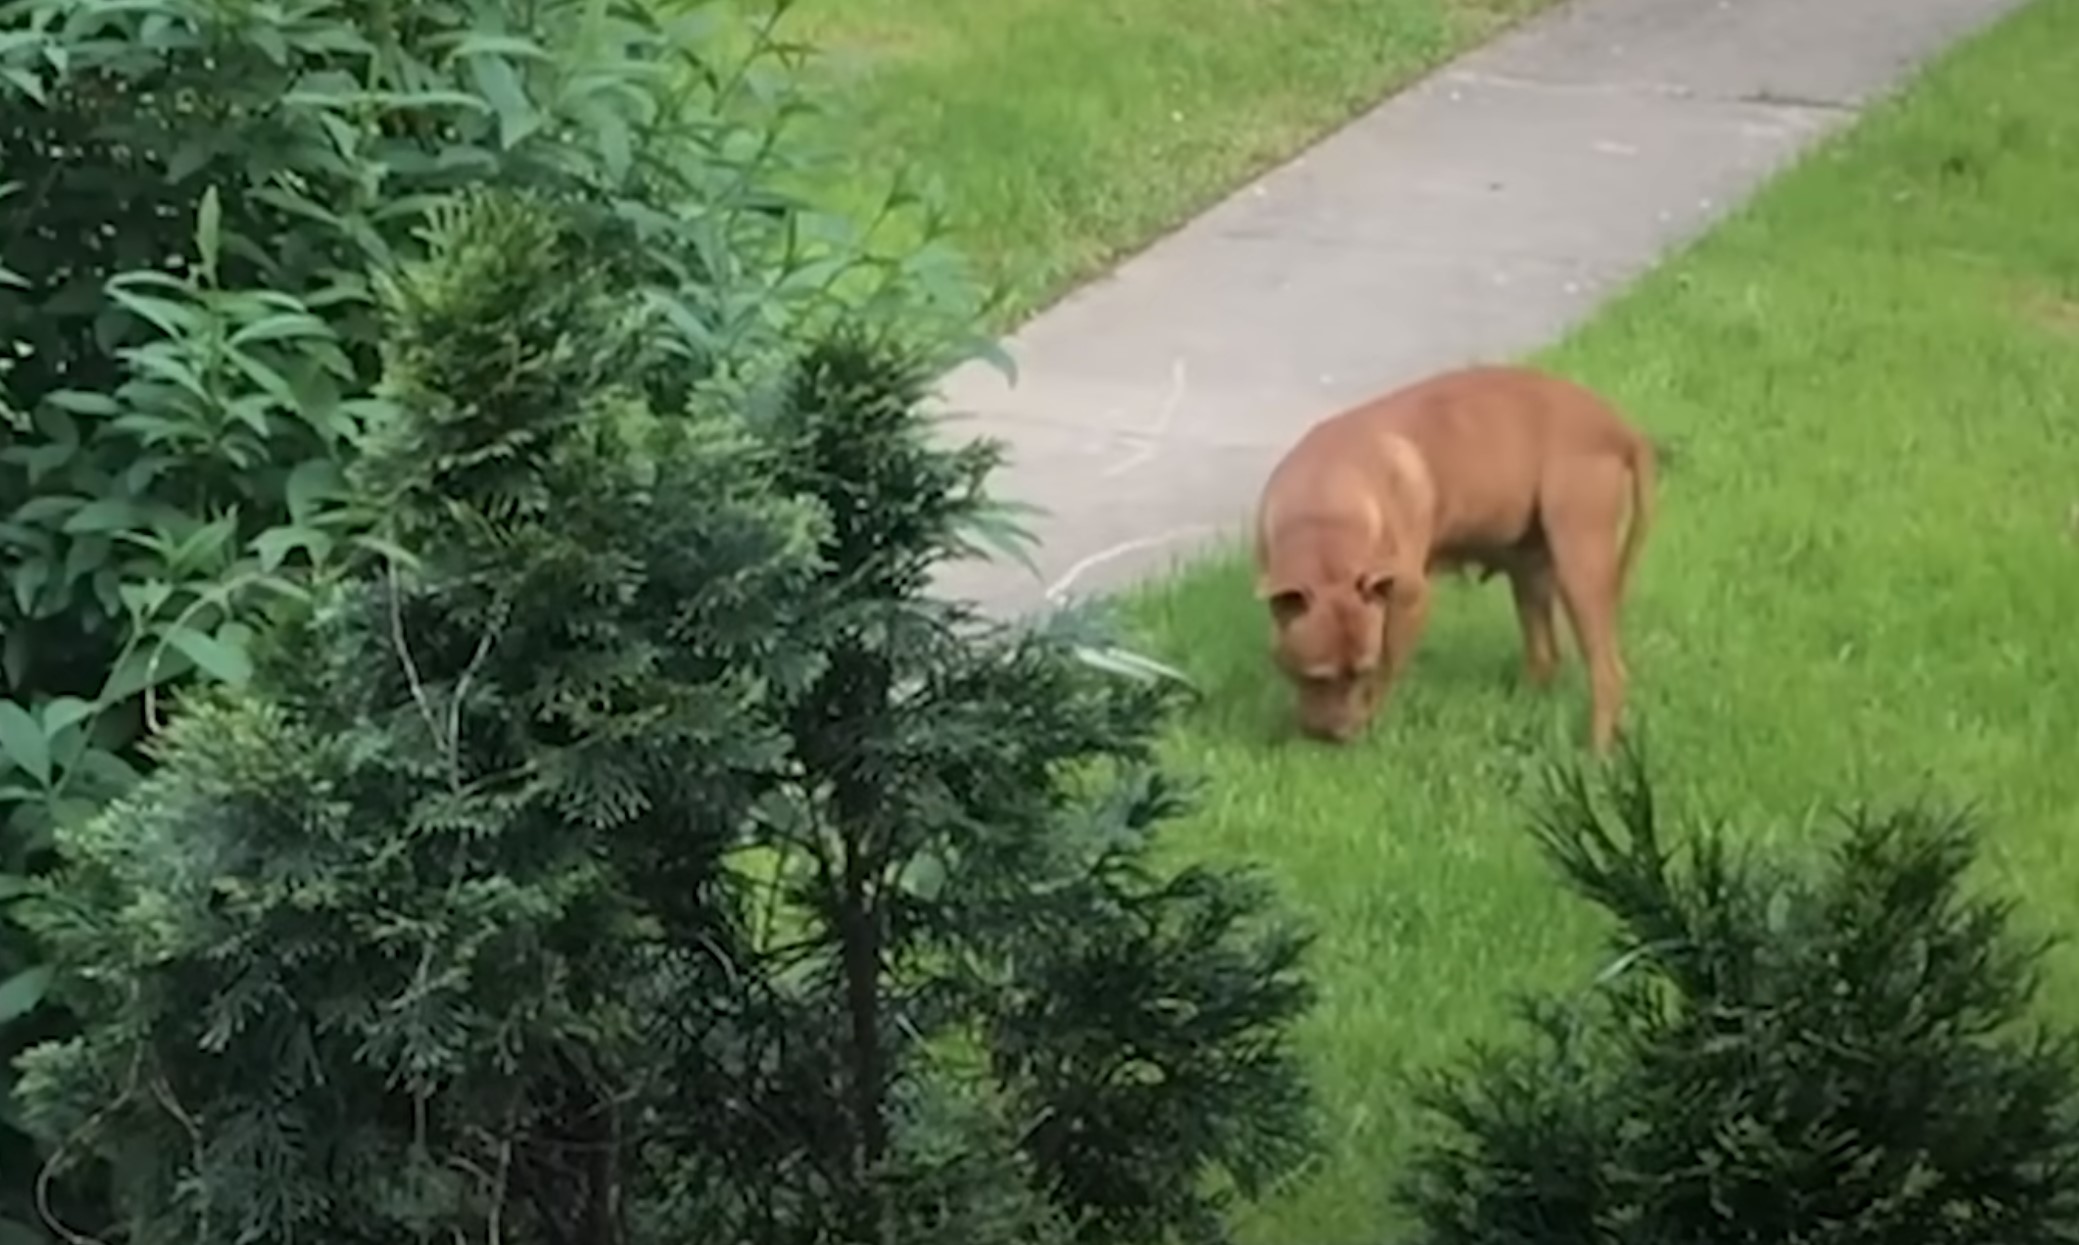 pitbull on grass